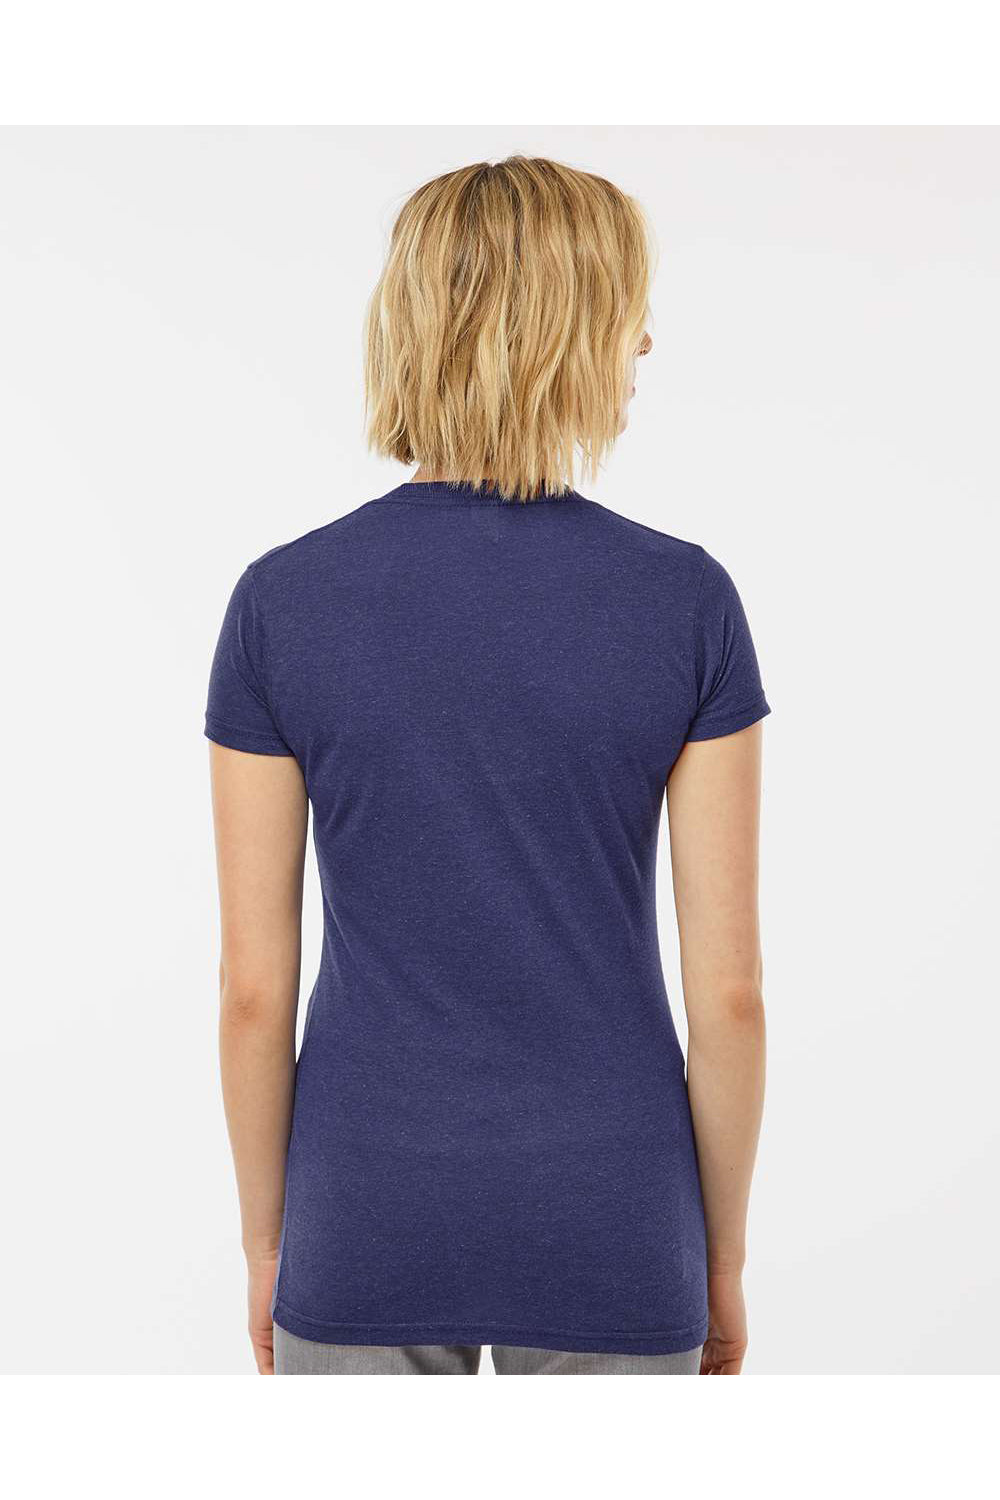 Tultex 253 Womens Short Sleeve Crewneck T-Shirt Midnight Navy Blue Model Back